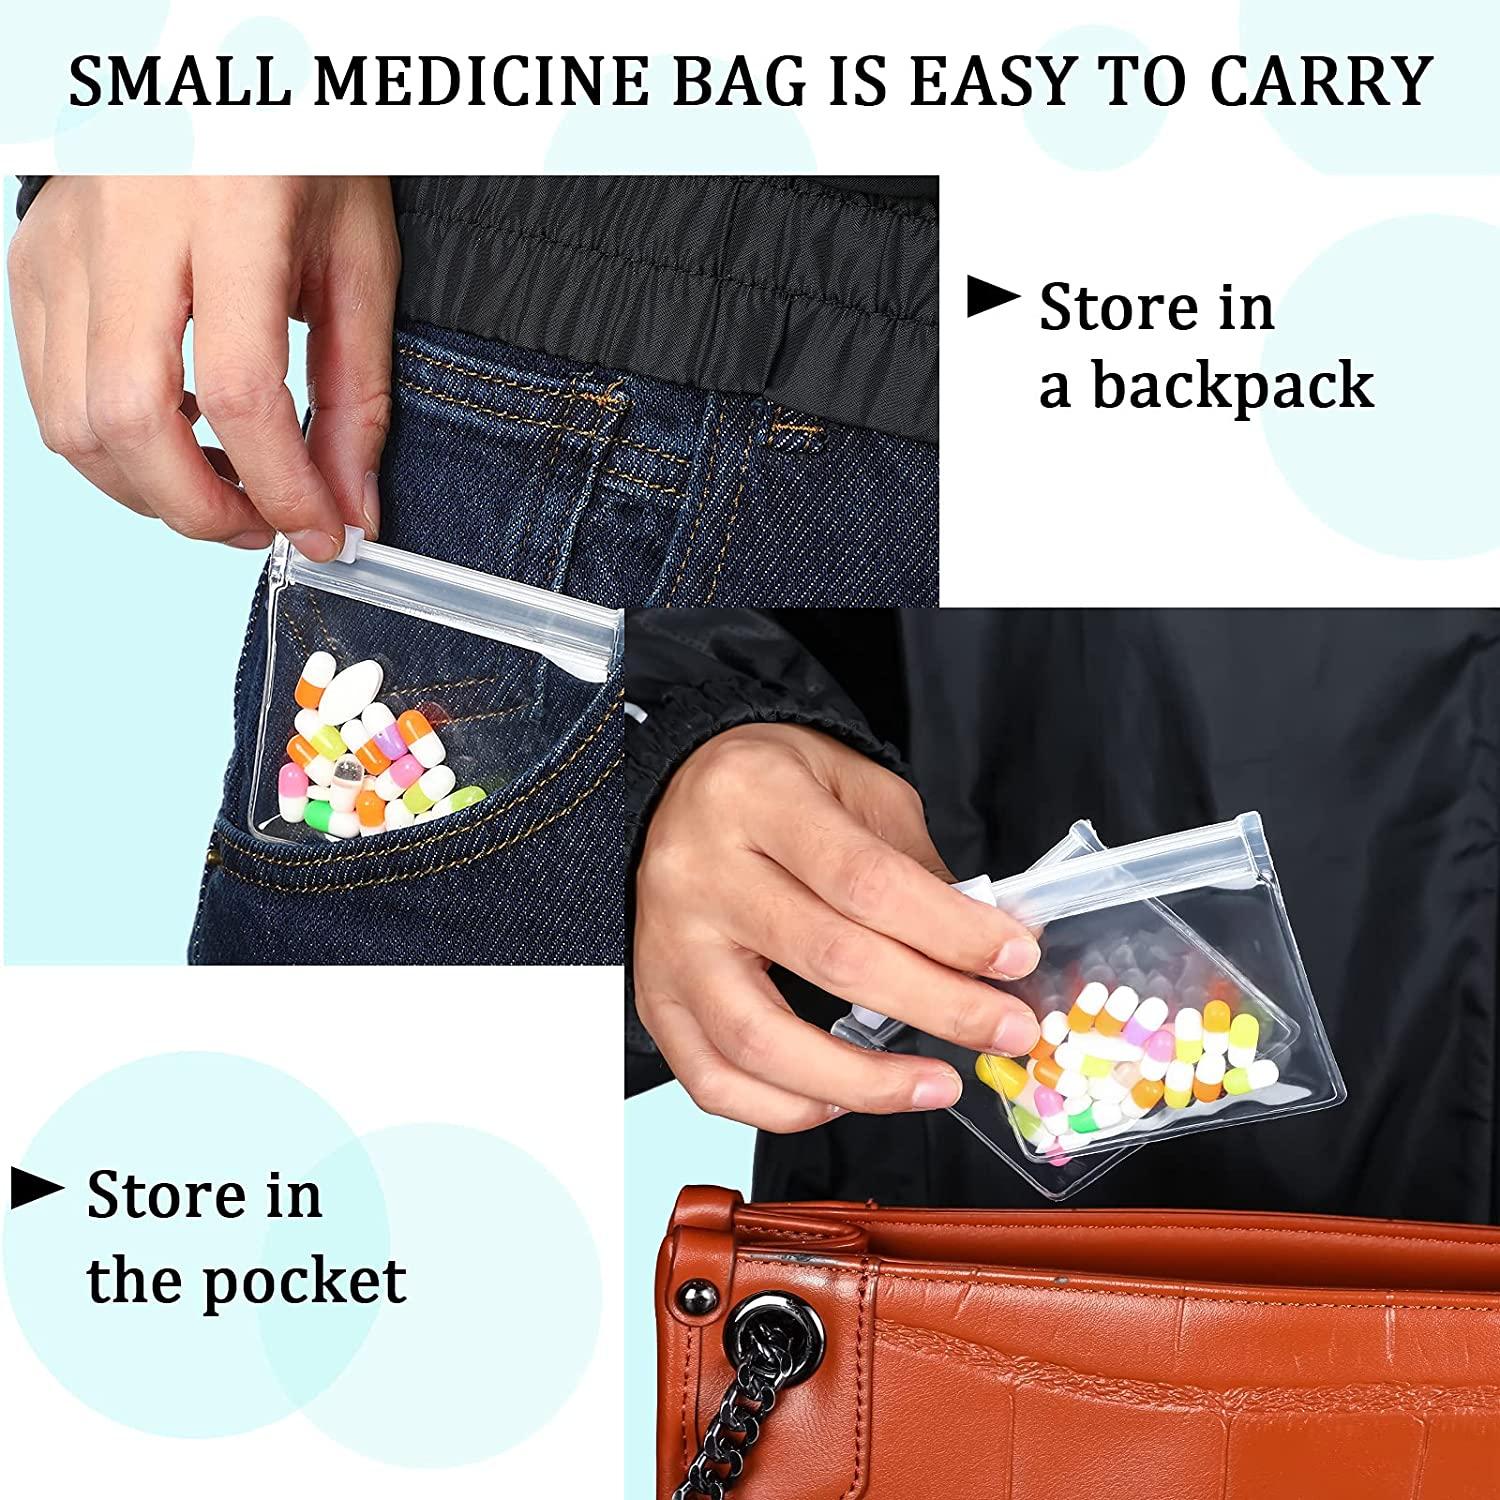 Pill Pouches, Plastic Pill Bags (Pack of 200) – Resealable Zipper